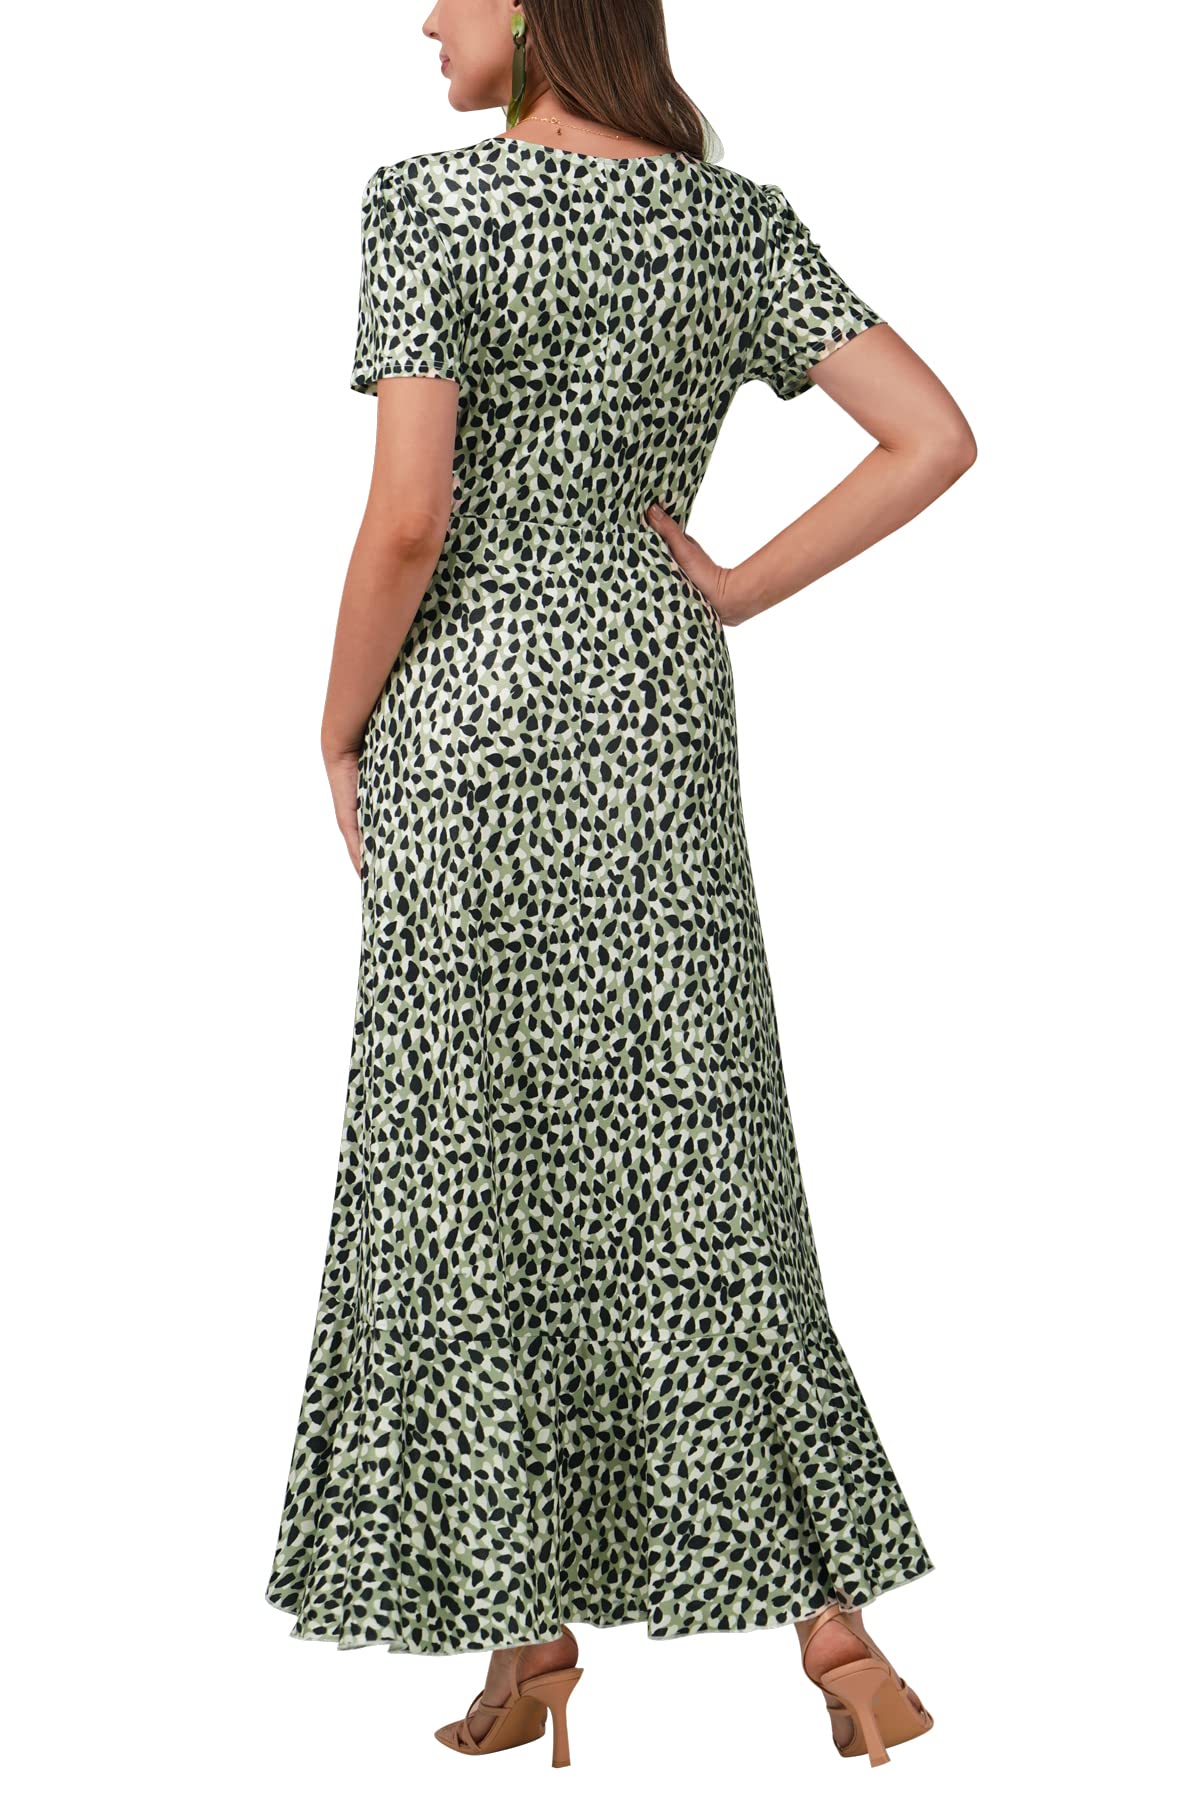 BAISHENGGT Womens Summer Short Sleeve Wrap V Neck Dress Green Petaloid Print Ruffle Hem Bohemian Flowy Long Maxi Dresses